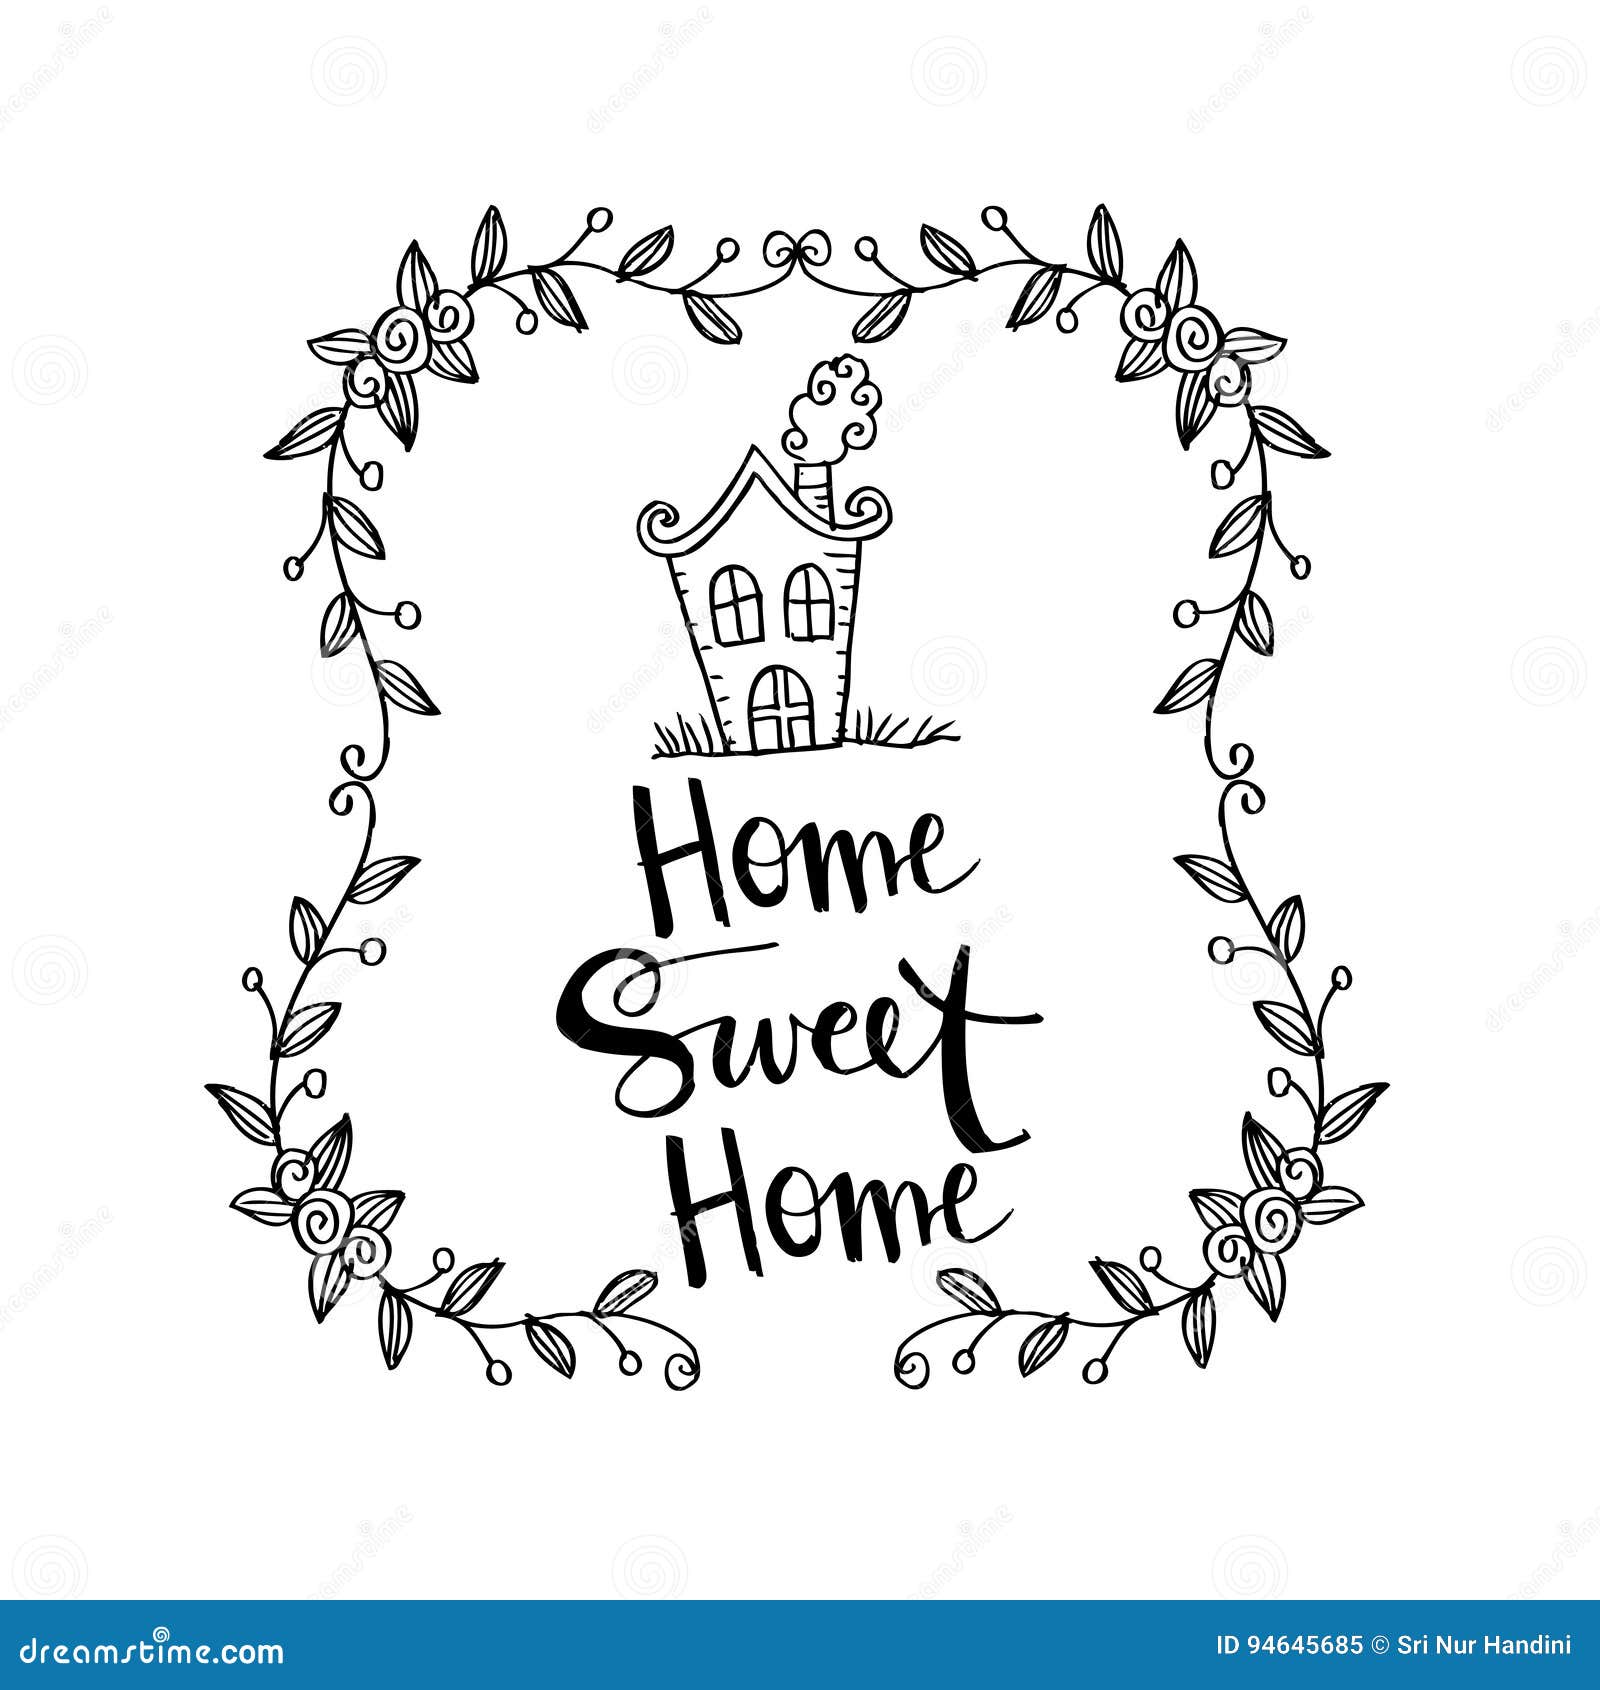 Home sweet home. stock illustration. Illustration of phrase - 94645685